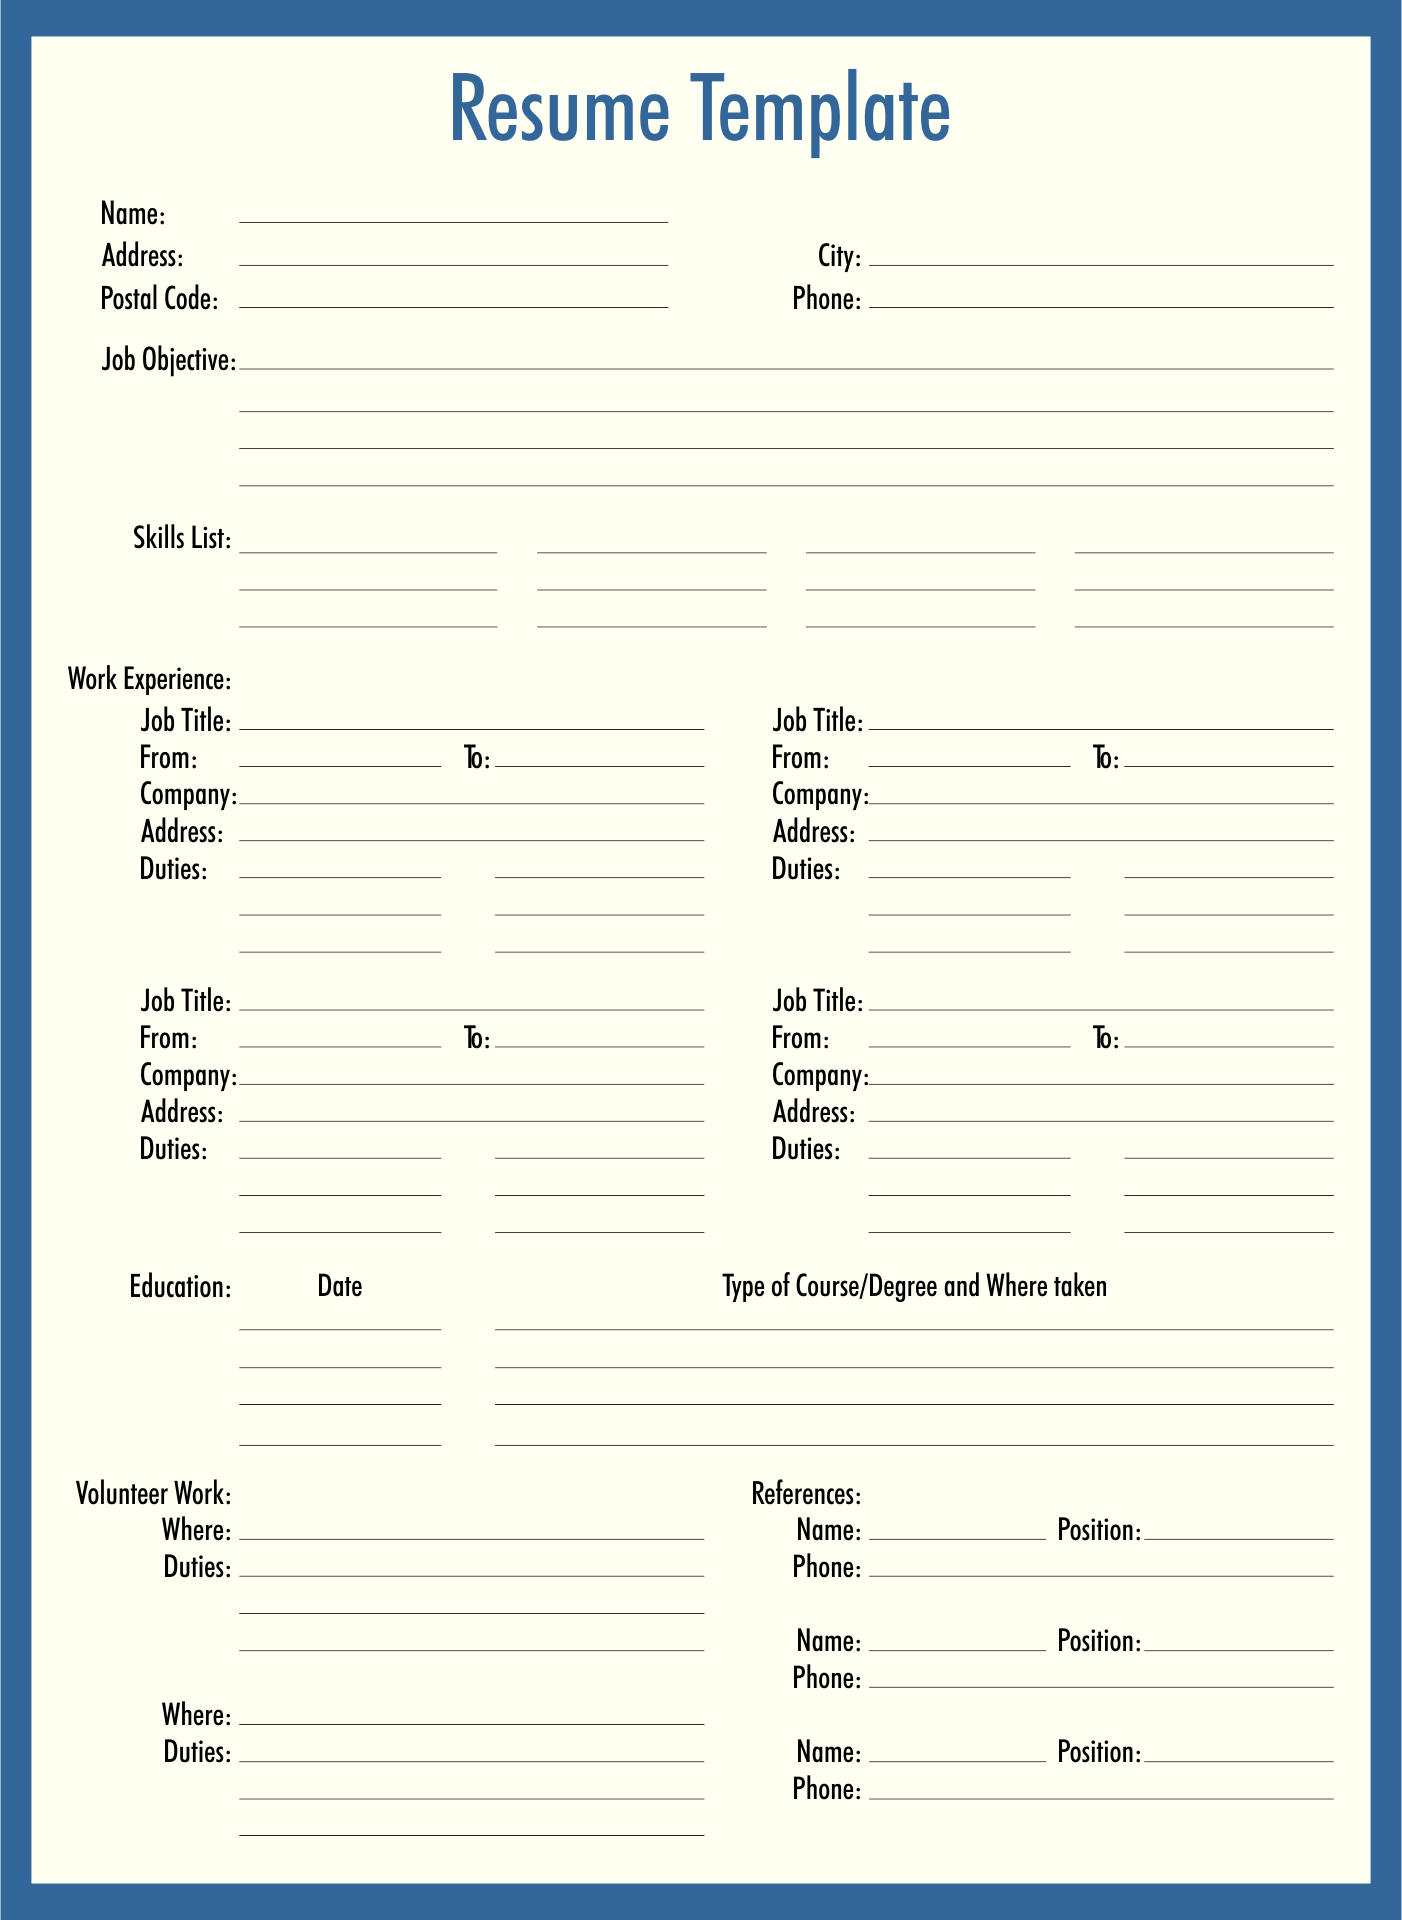 Print Blank Resume Form